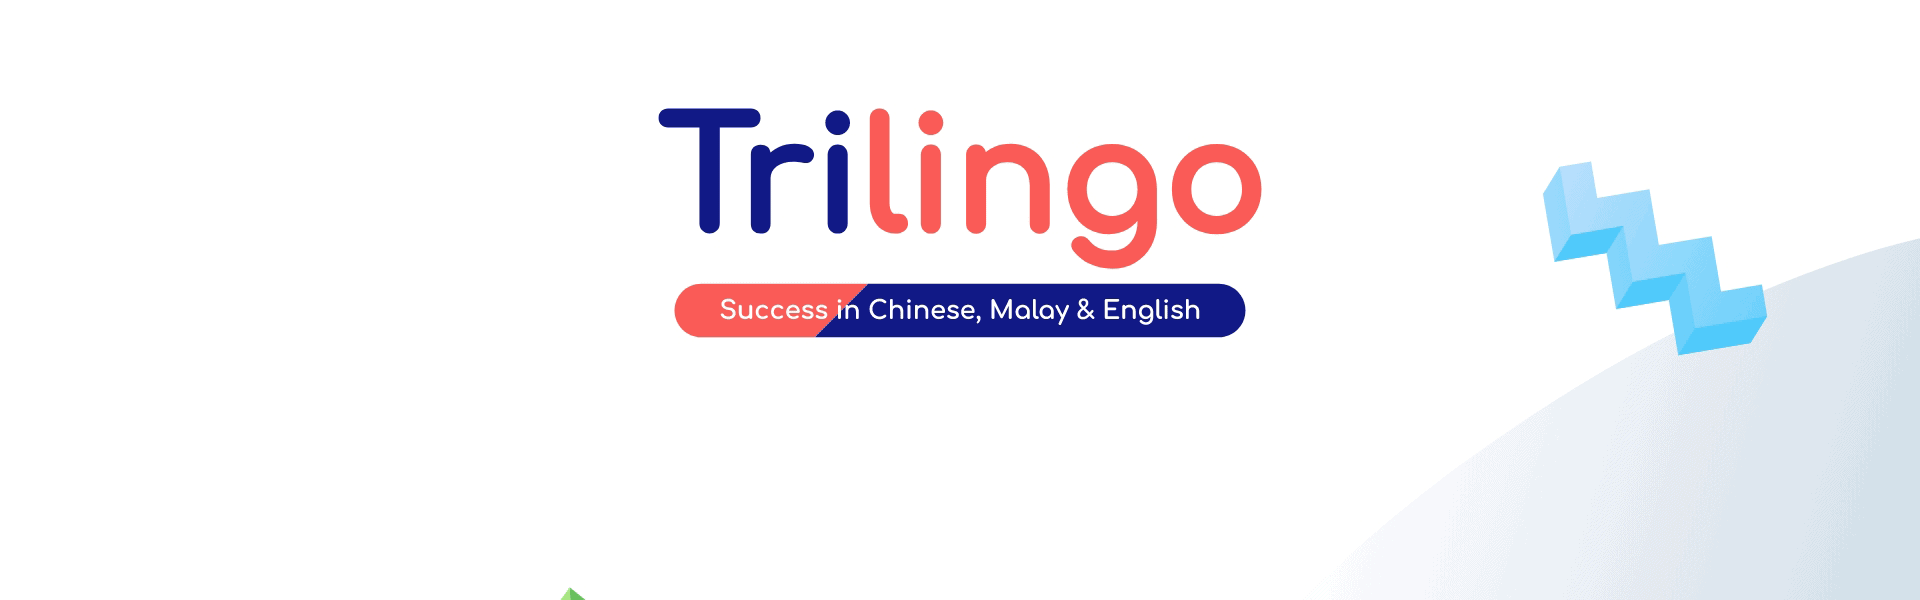 Trillingo---Mock-up (24)